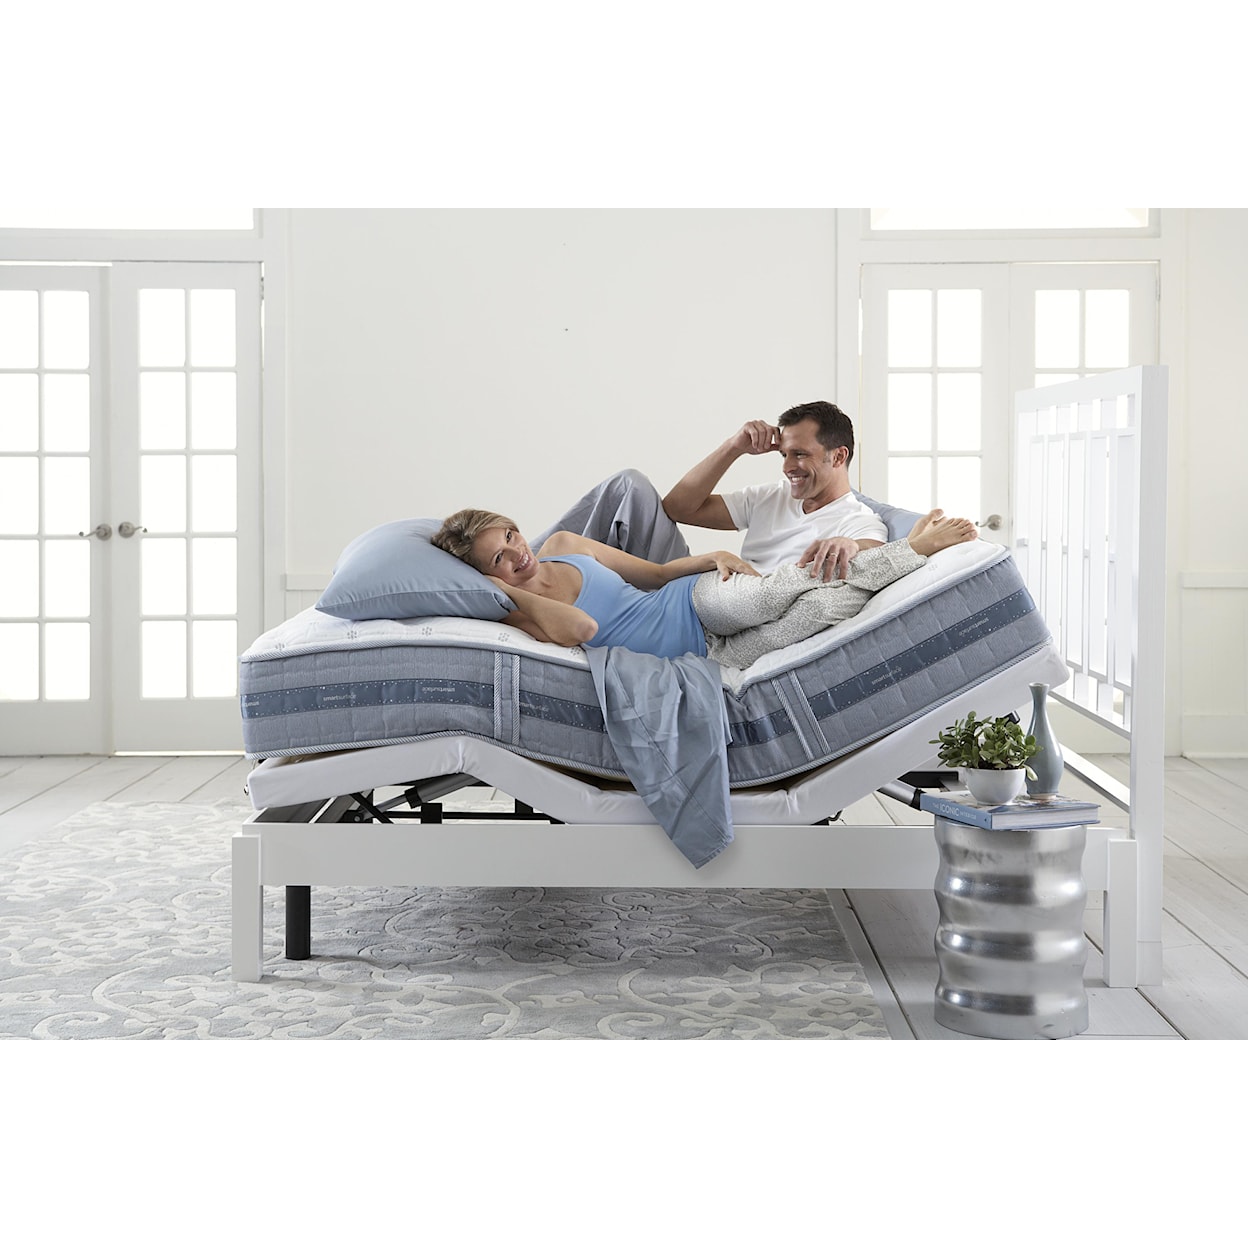 Serta Perfect Sleeper Tidmore Twin XL Firm Adjustable Base Set